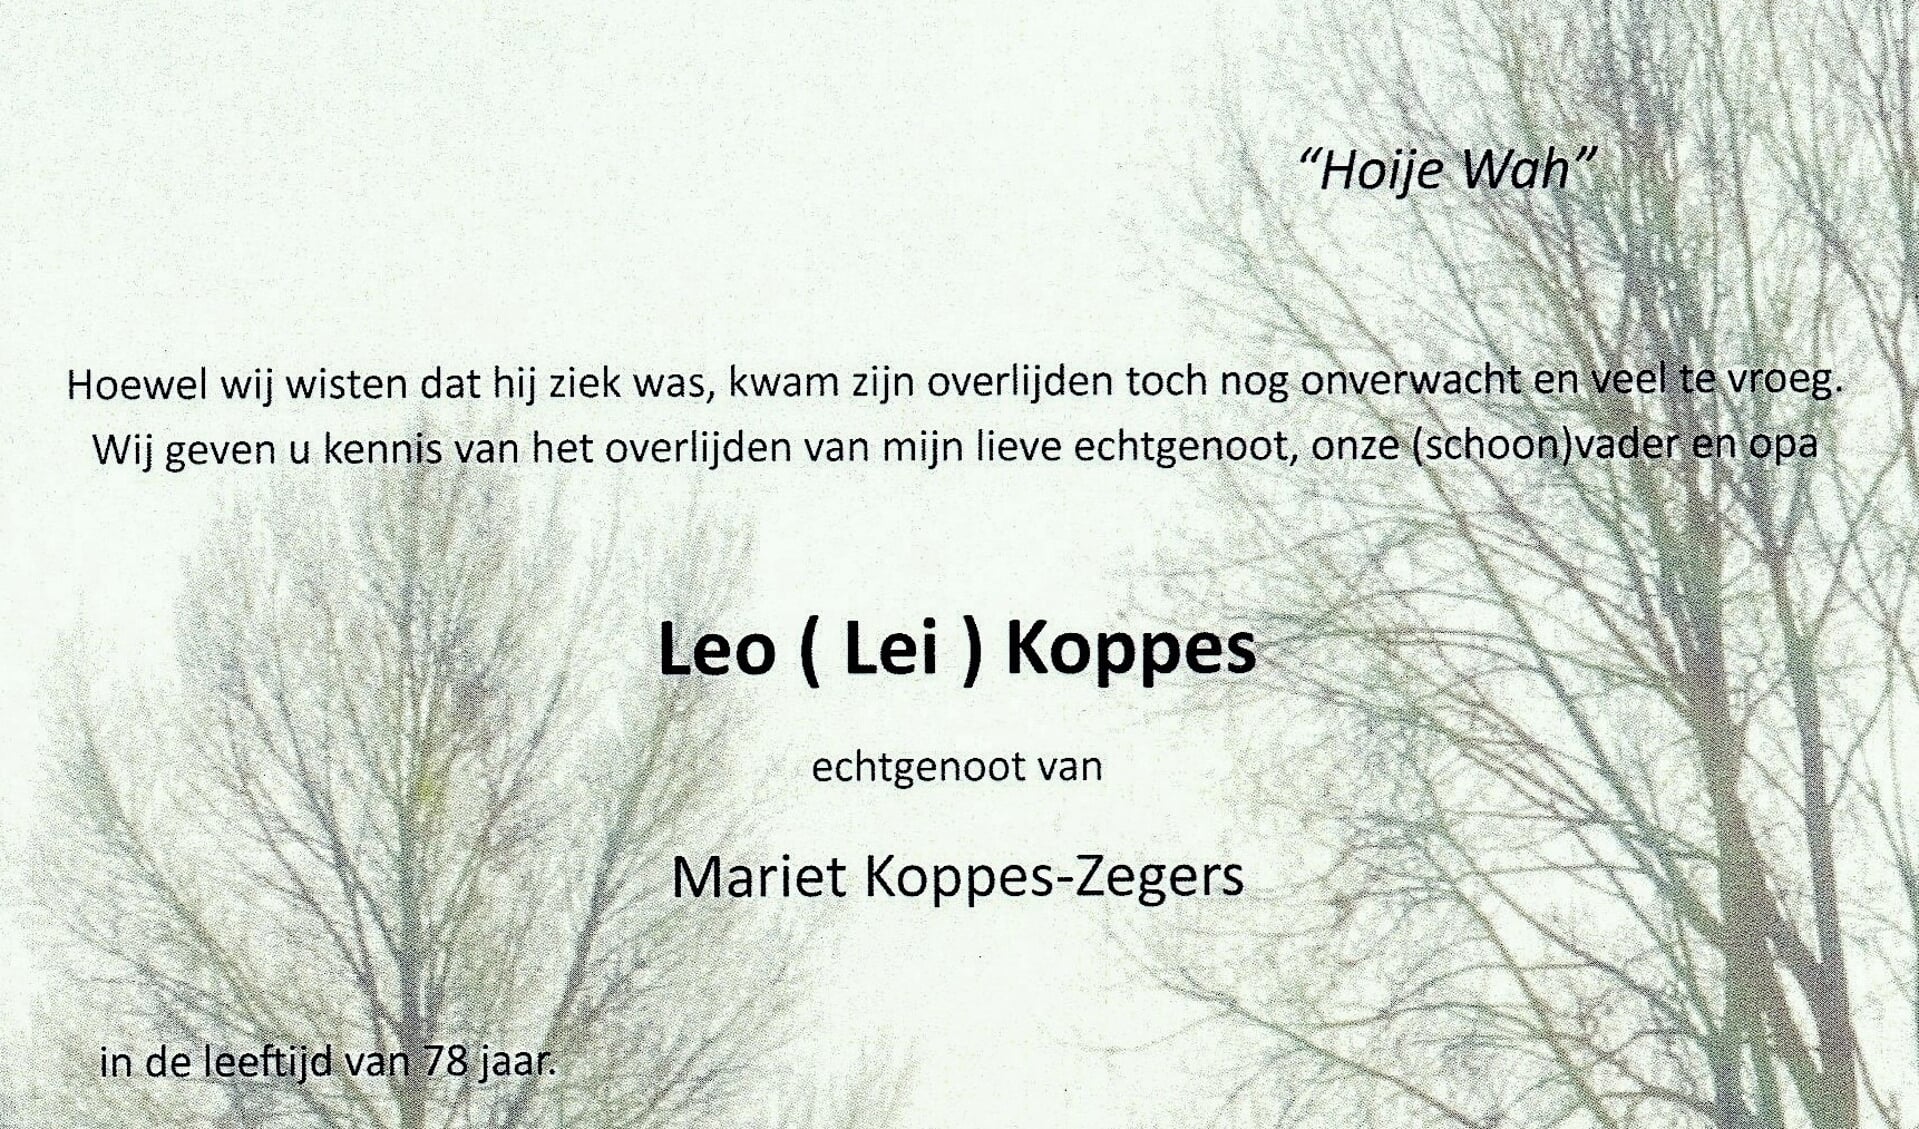 Leo Koppes is op 12 november 2020 overleden